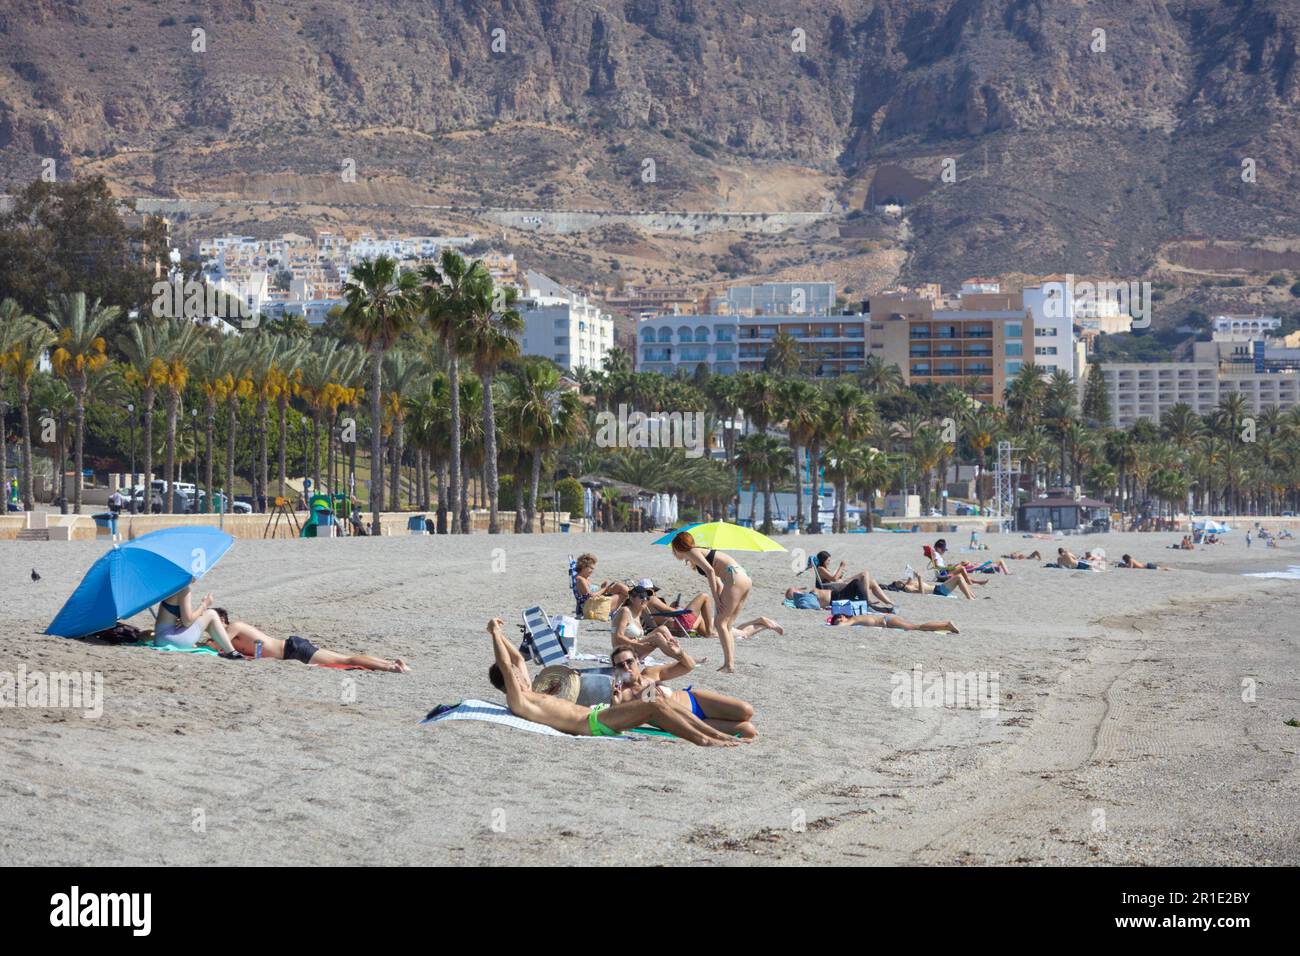 People sunbathing on the beach in aguadulce, almeria, spain Stock Photo